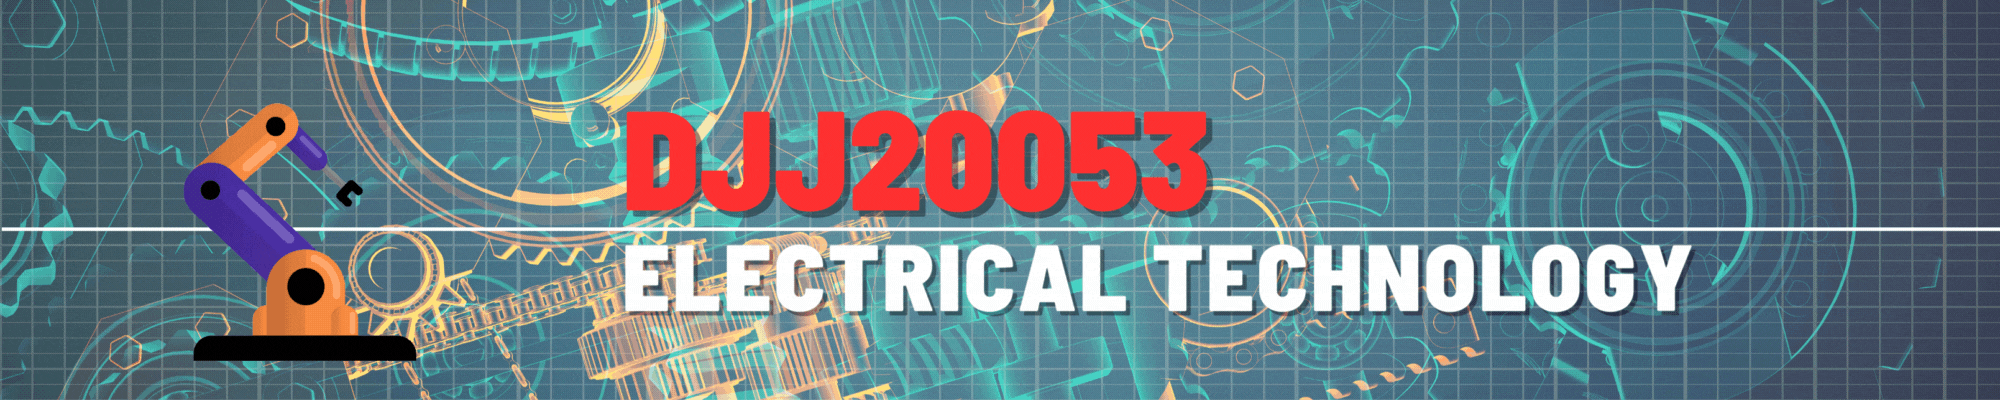 DJJ20053 ELECTRICAL TECHNOLOGY